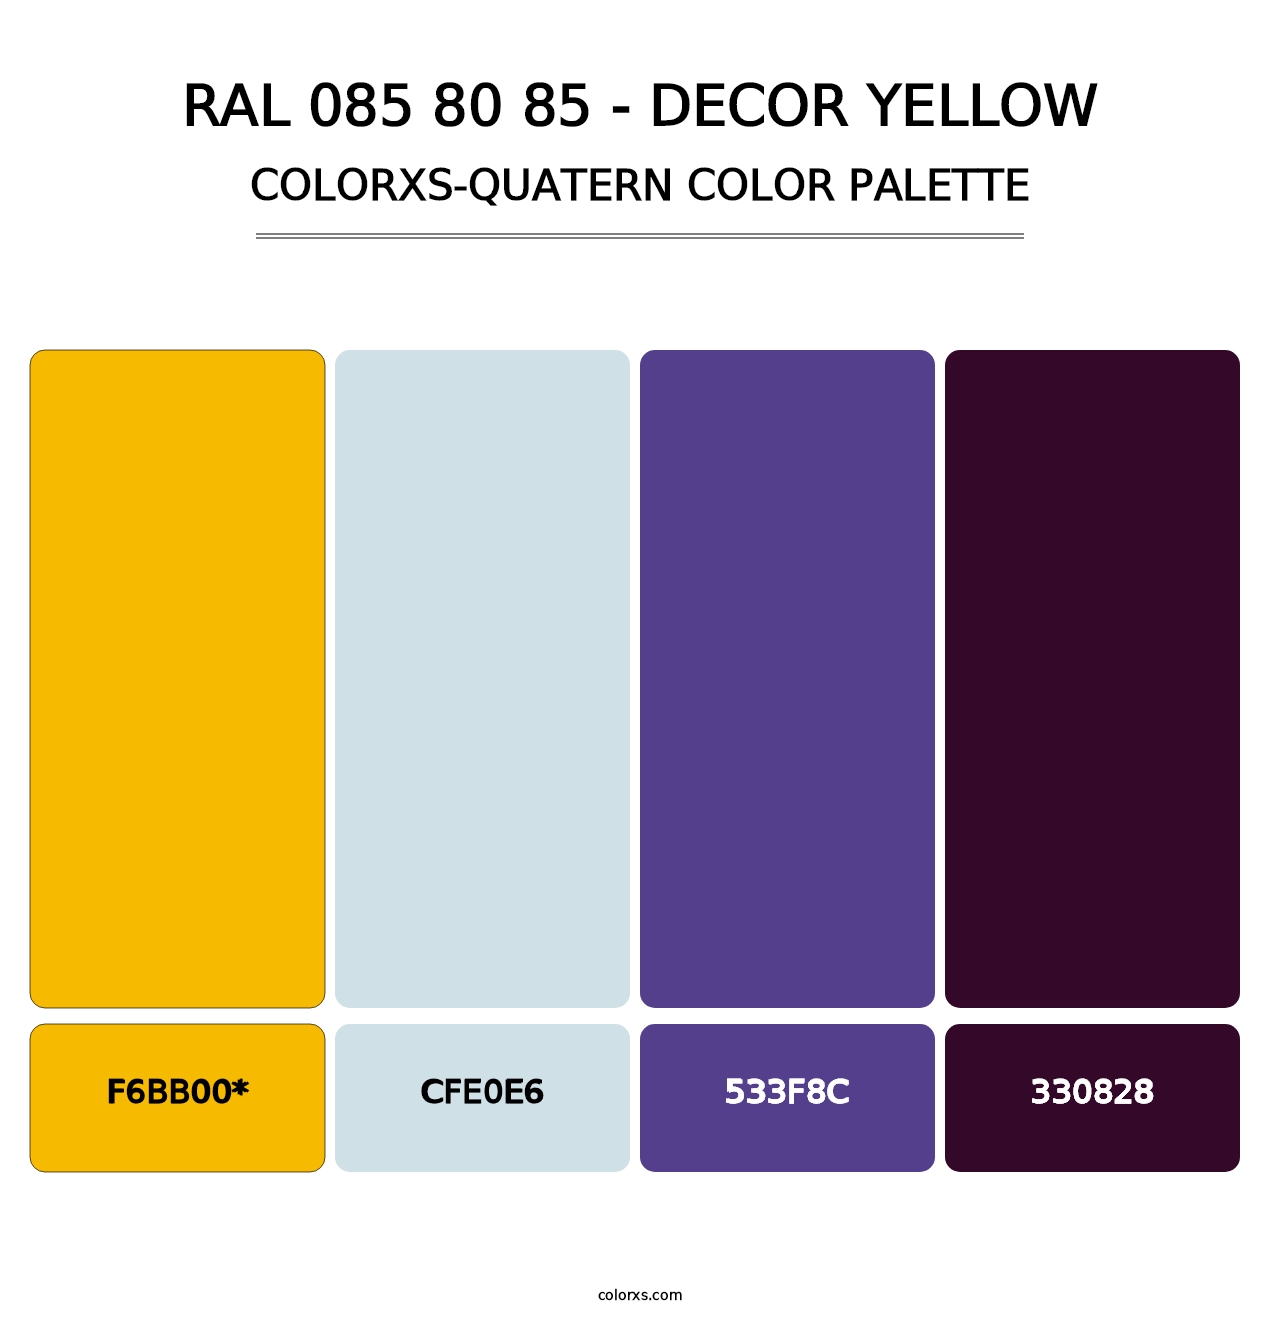 RAL 085 80 85 - Decor Yellow - Colorxs Quatern Palette